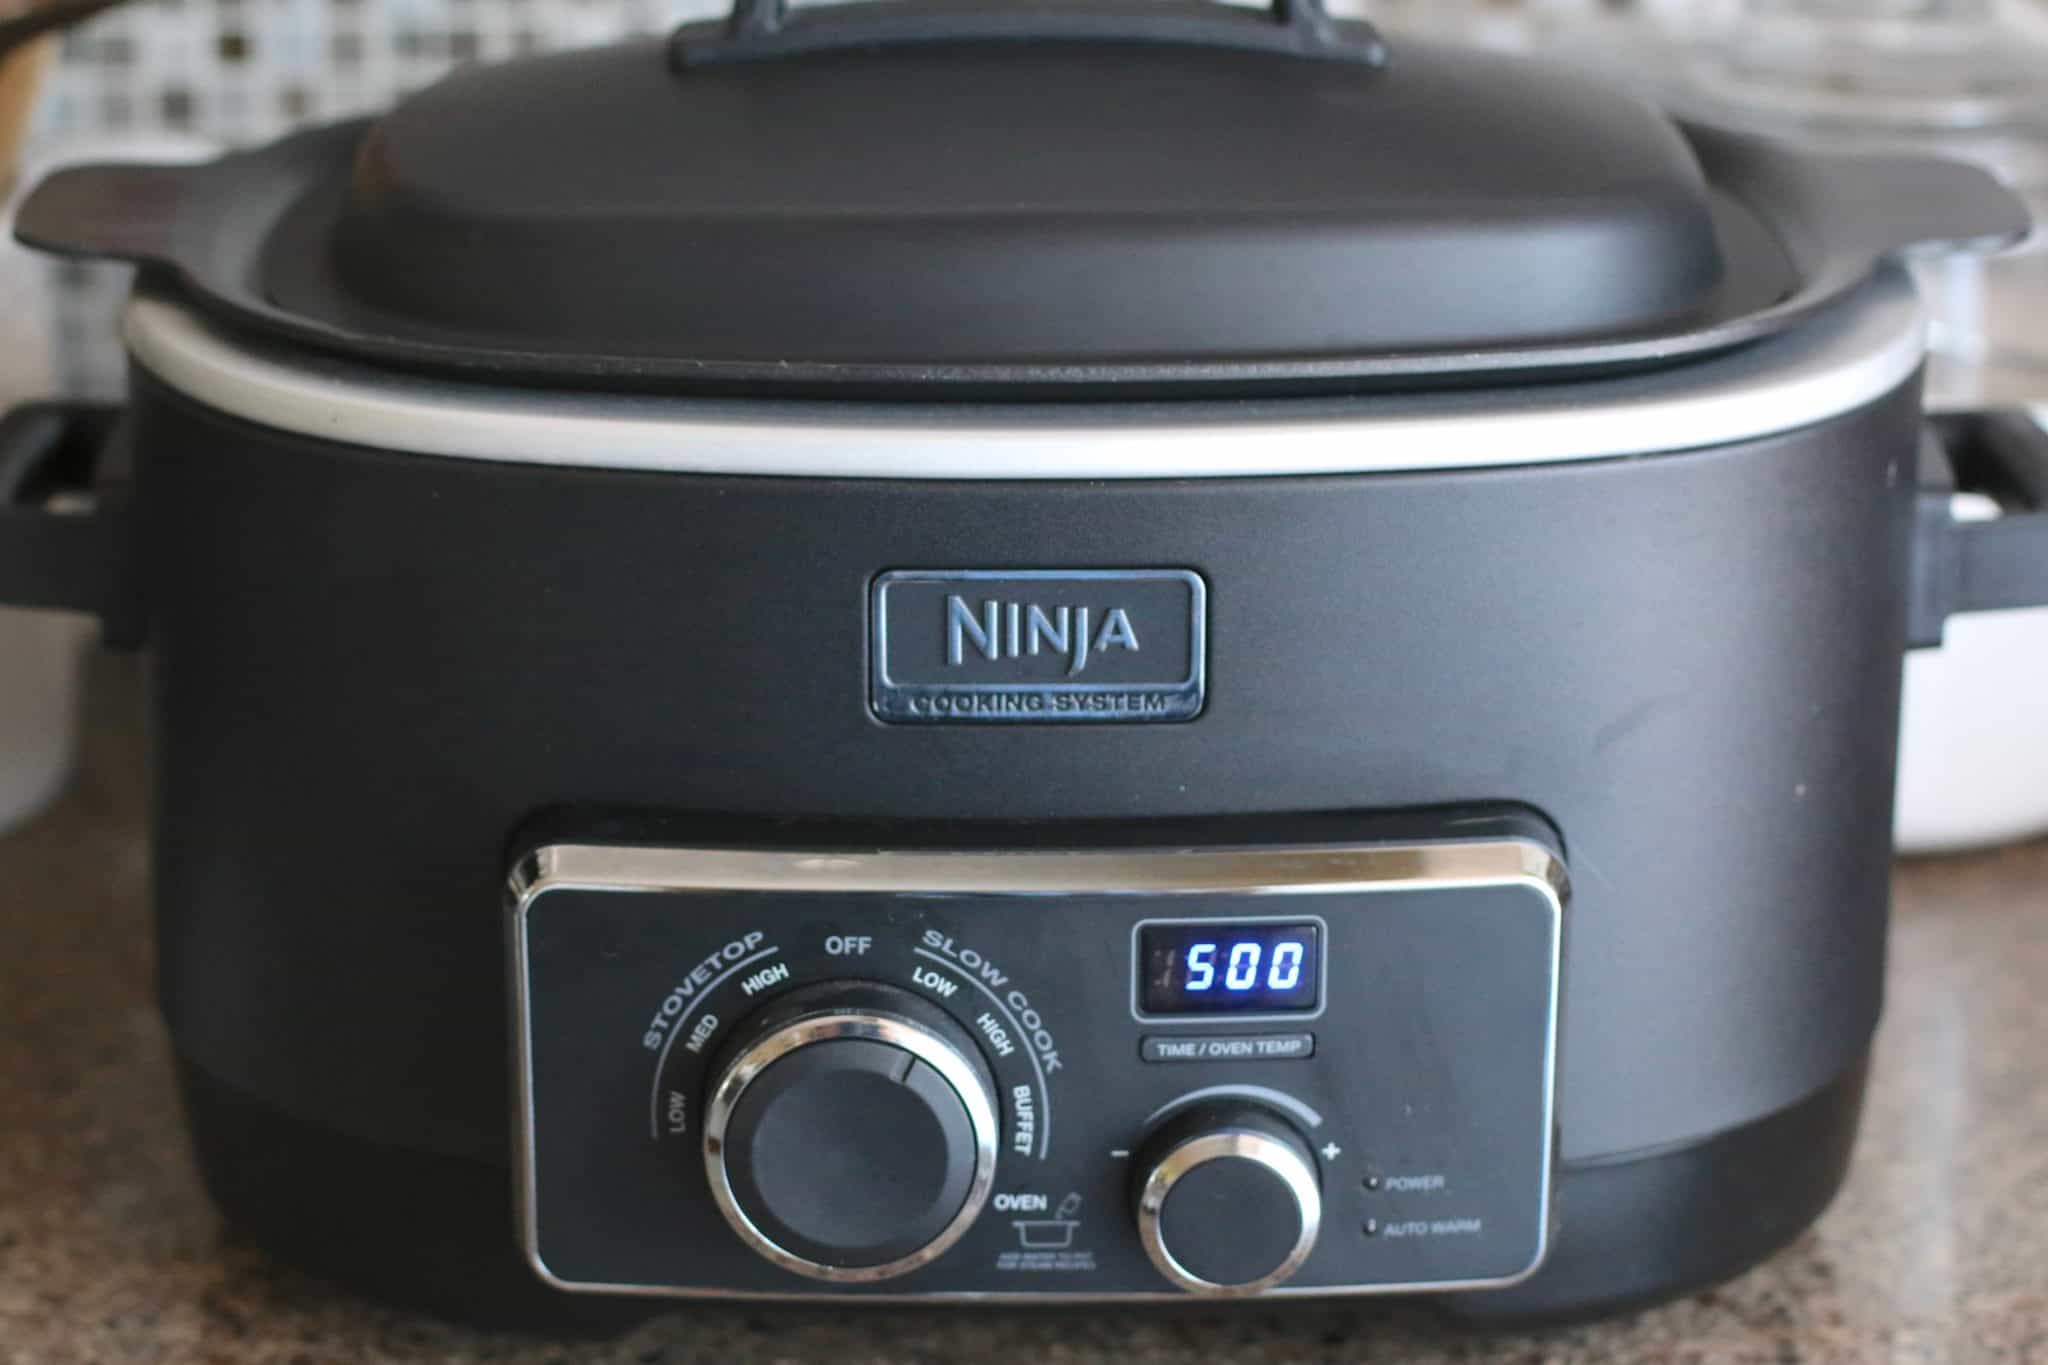 covered Ninja slow cooker set for five hours.